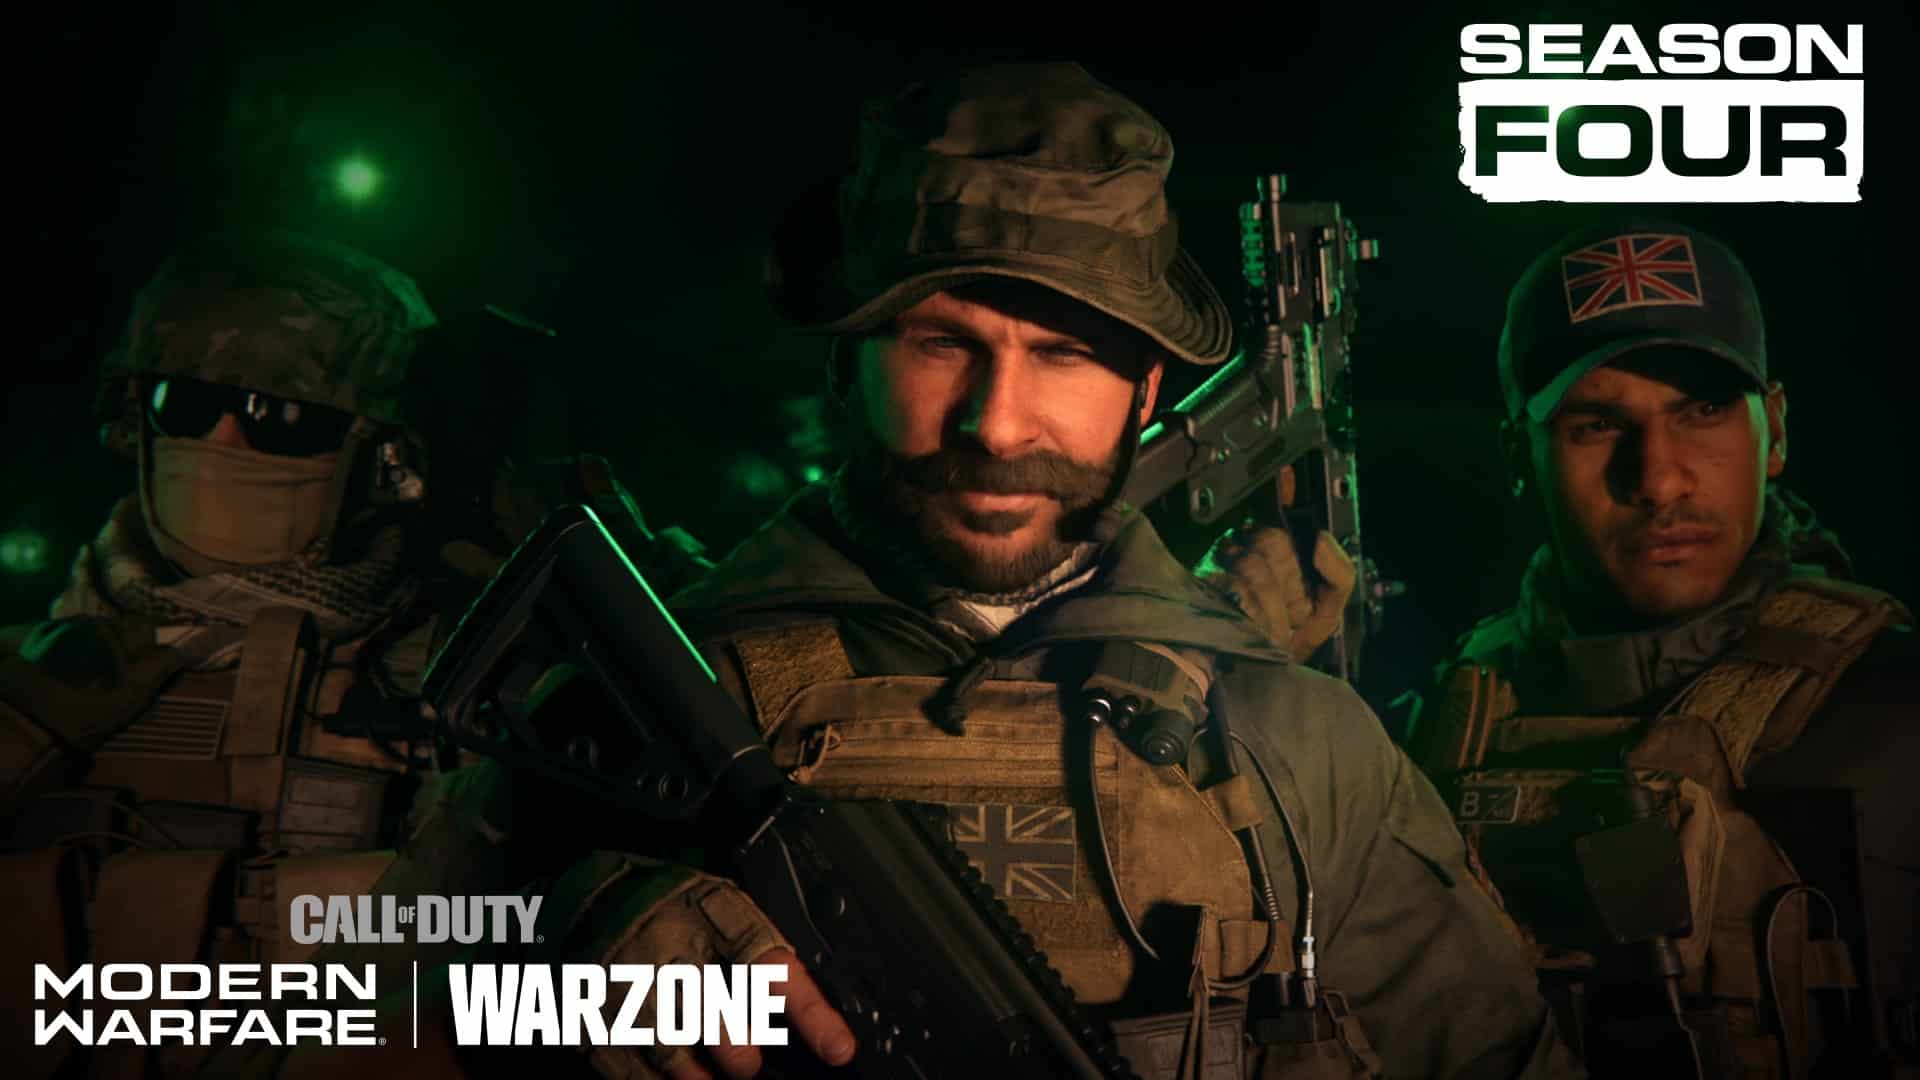 Modern Warfare and Warzone Season 4 Release Date Announced